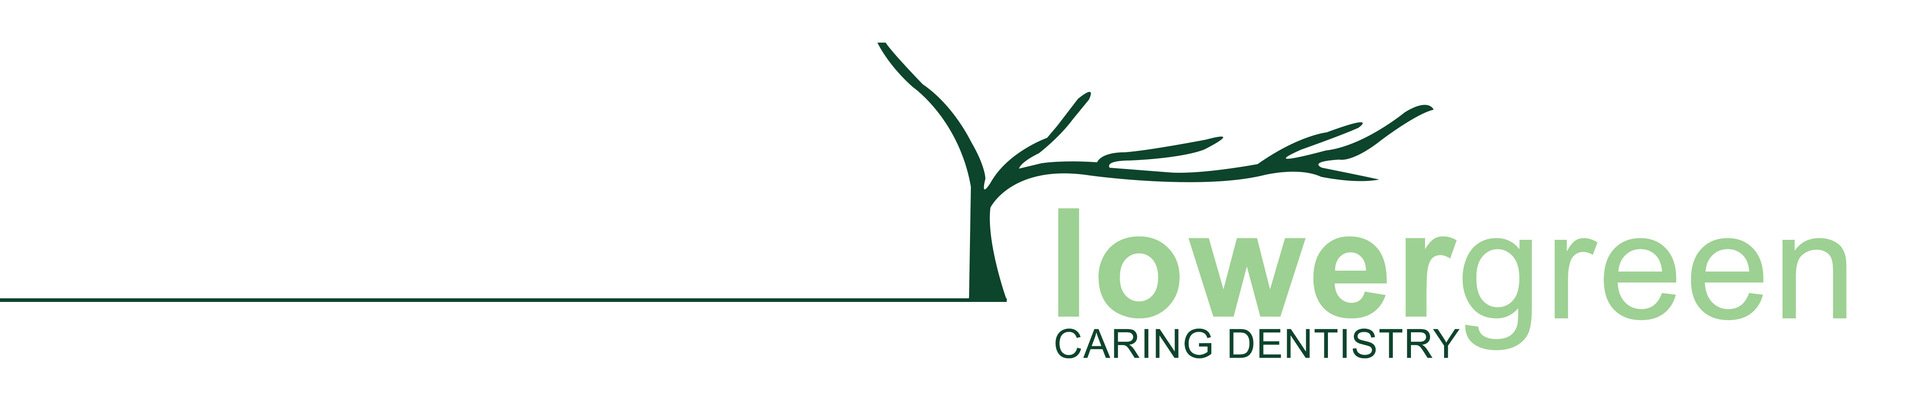 LOWER GREEN CARING DENTISTRY logo